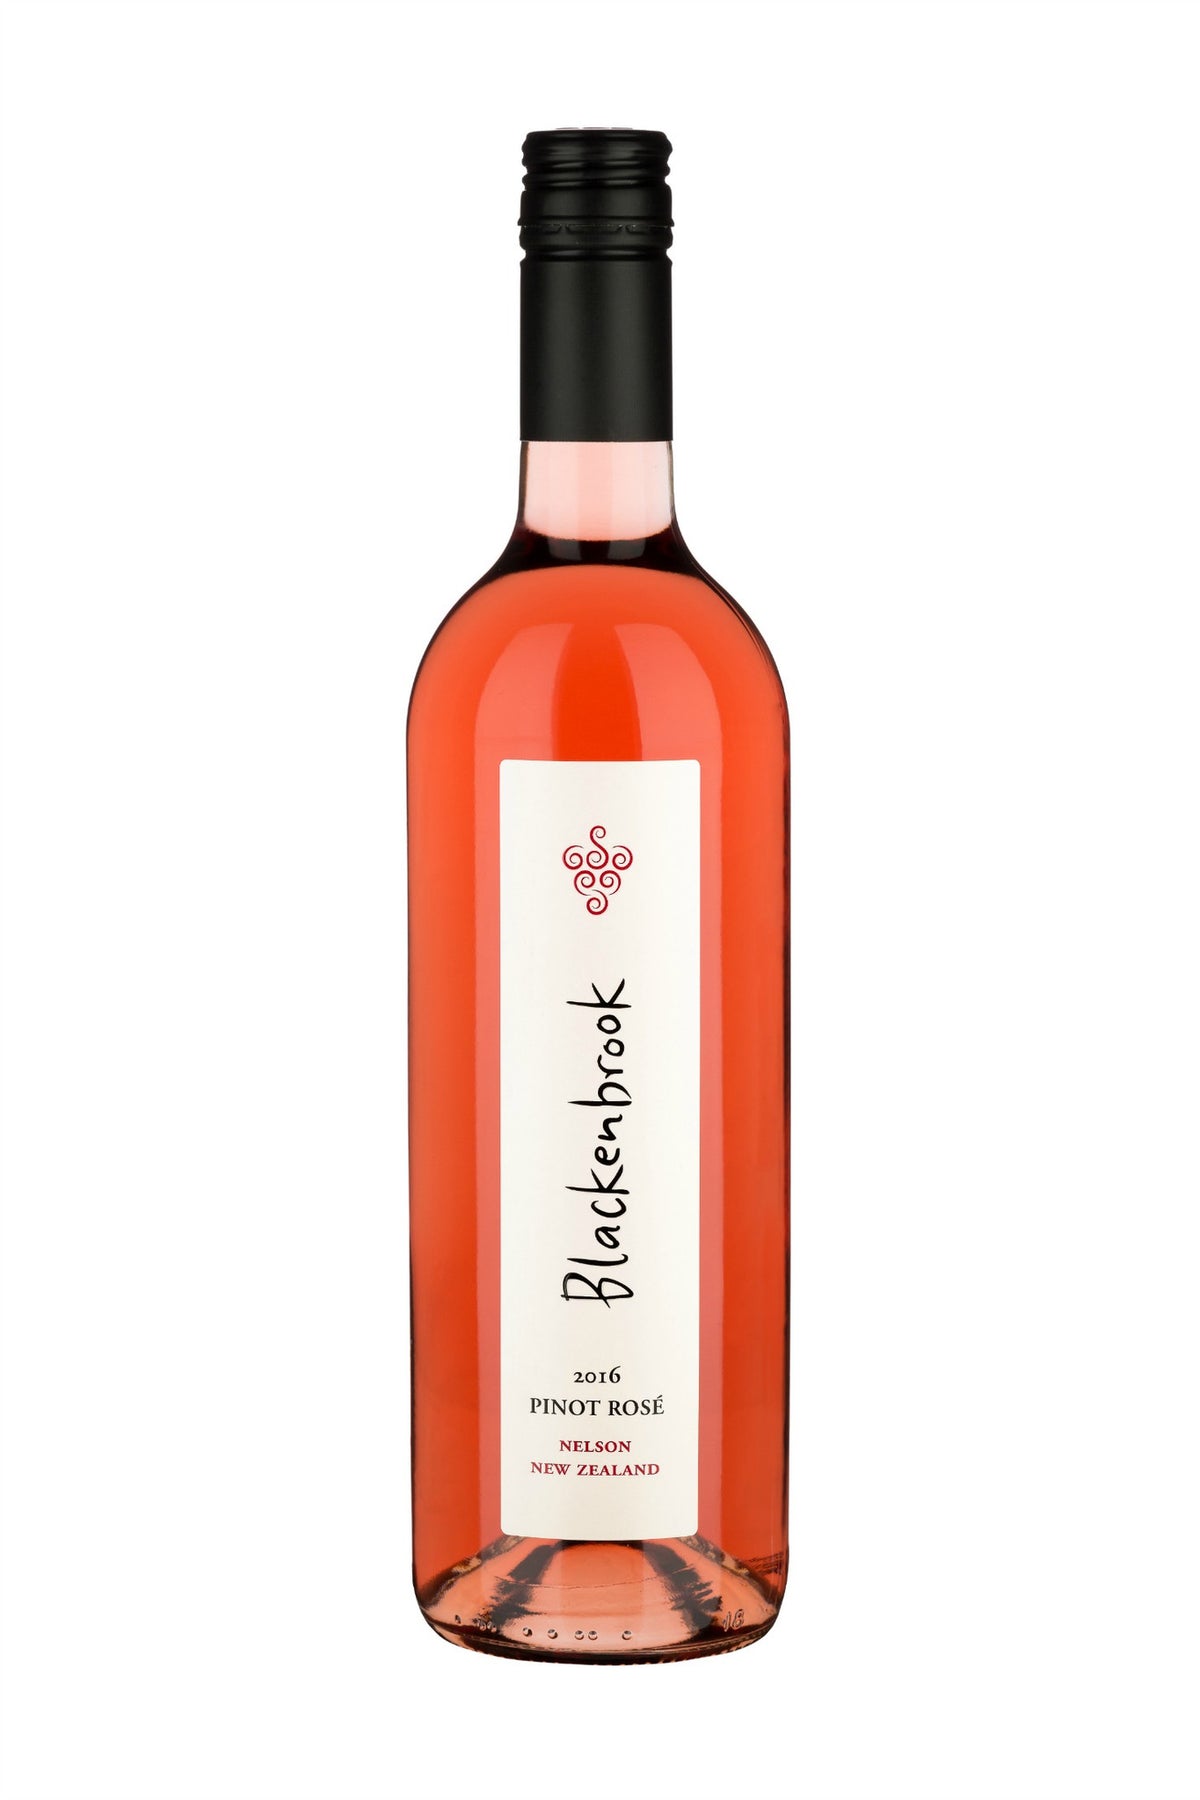 Blackenbrook Pinot Rosé 2016